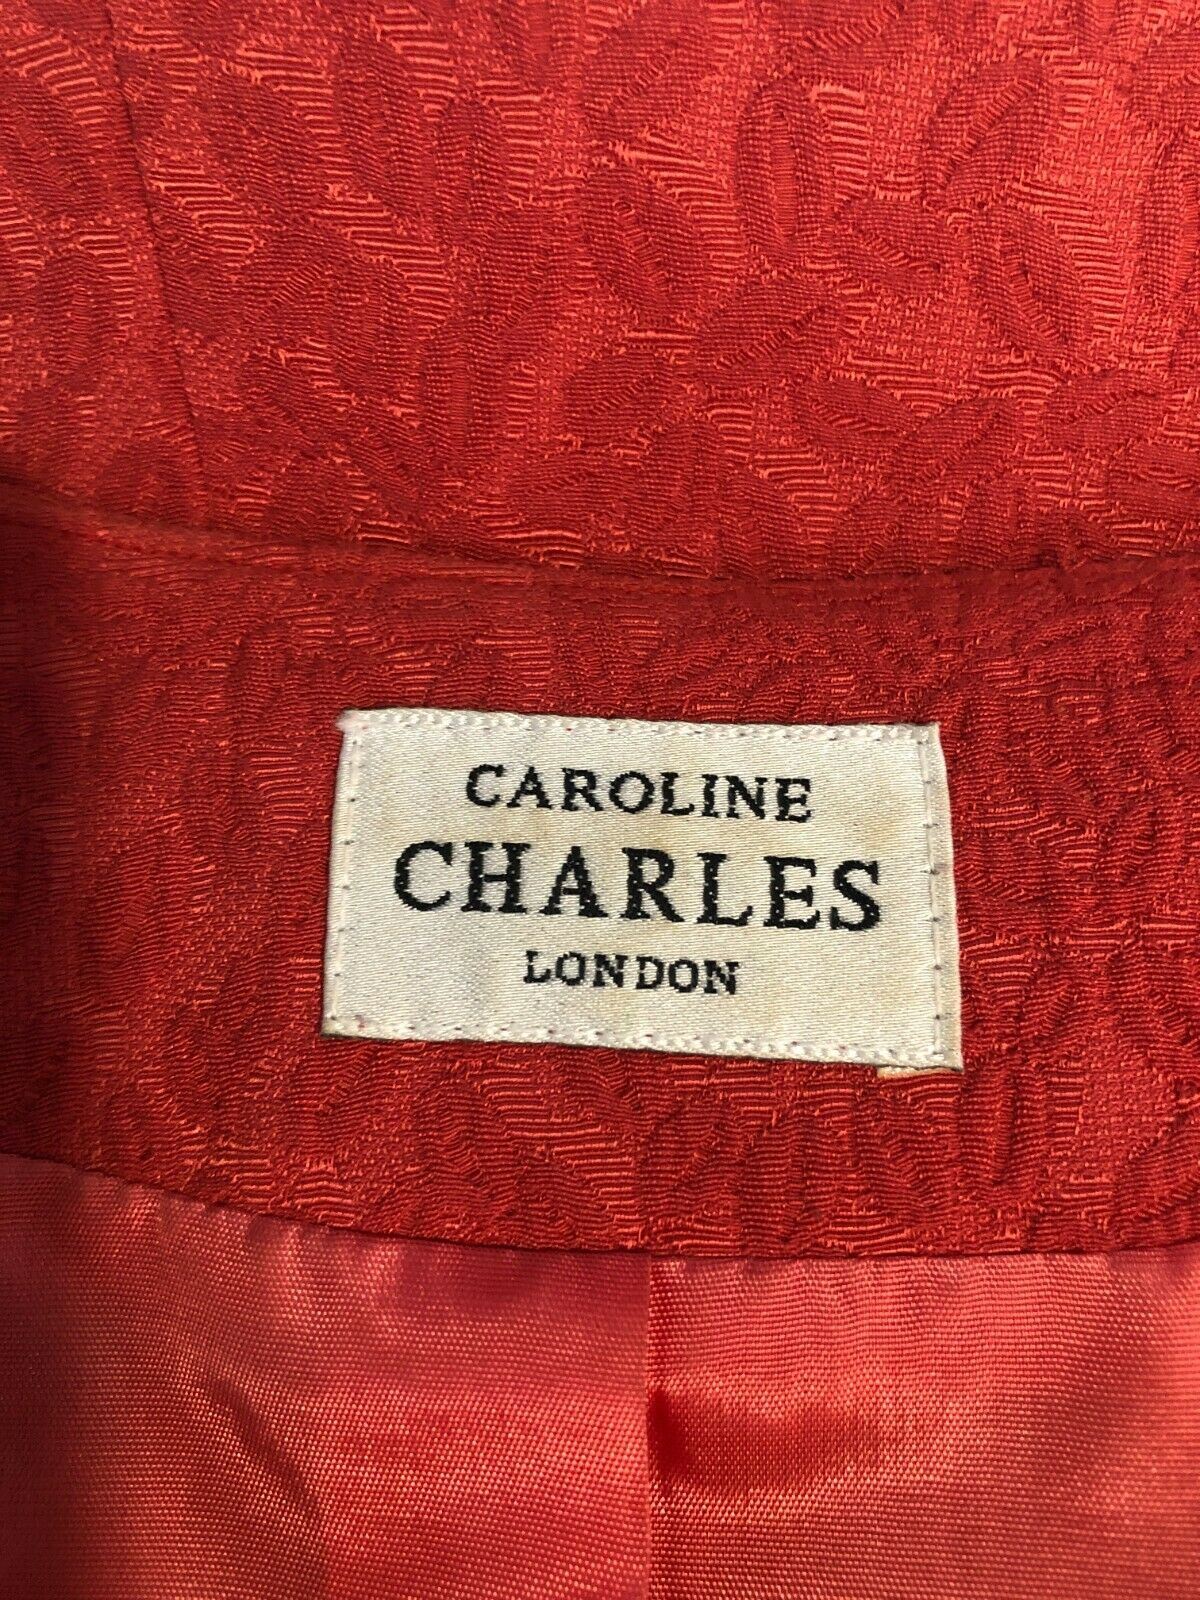 Caroline Charles London Burnt Orange Vintage Skirt Suit UK 6/8 US2/4 EU 34/36 Timeless Fashions